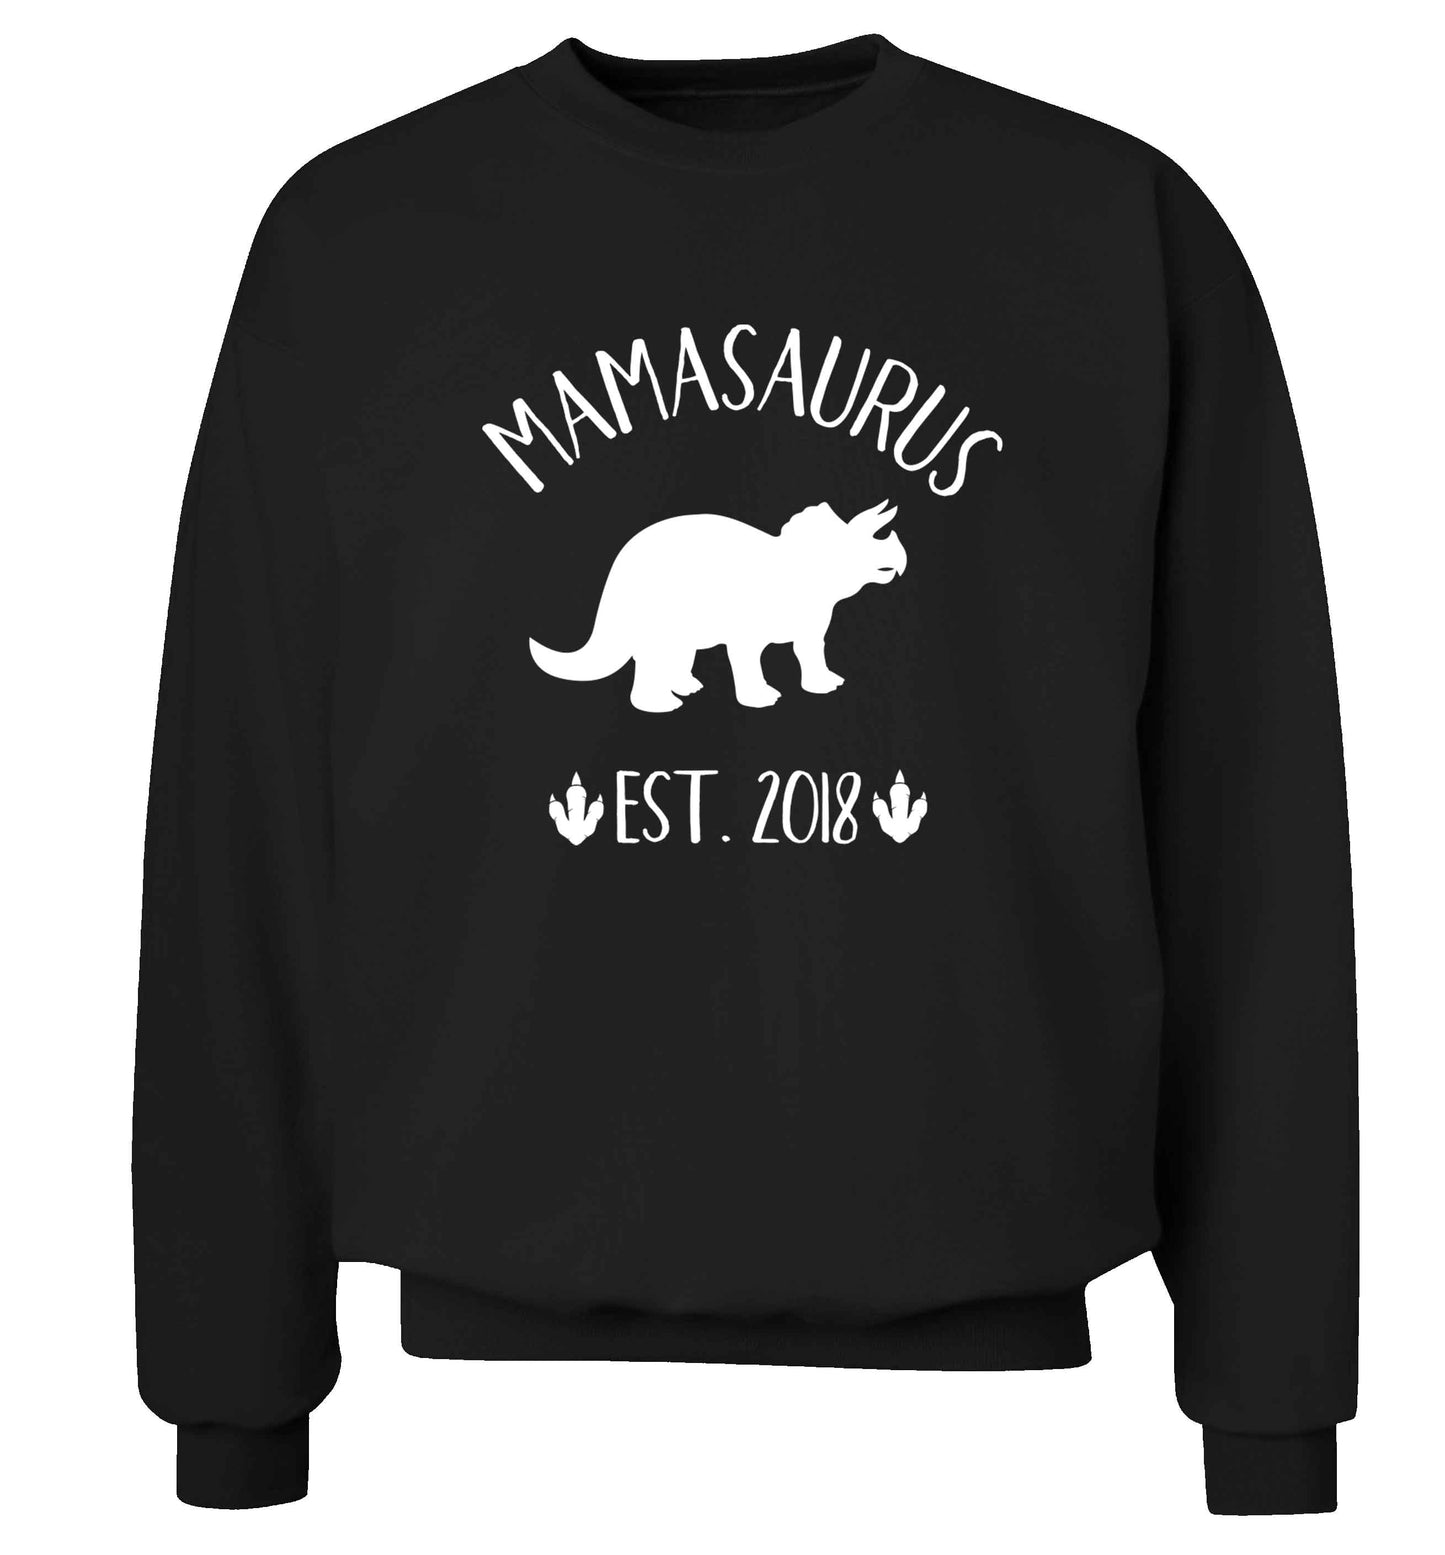 Personalised mamasaurus date adult's unisex black sweater 2XL